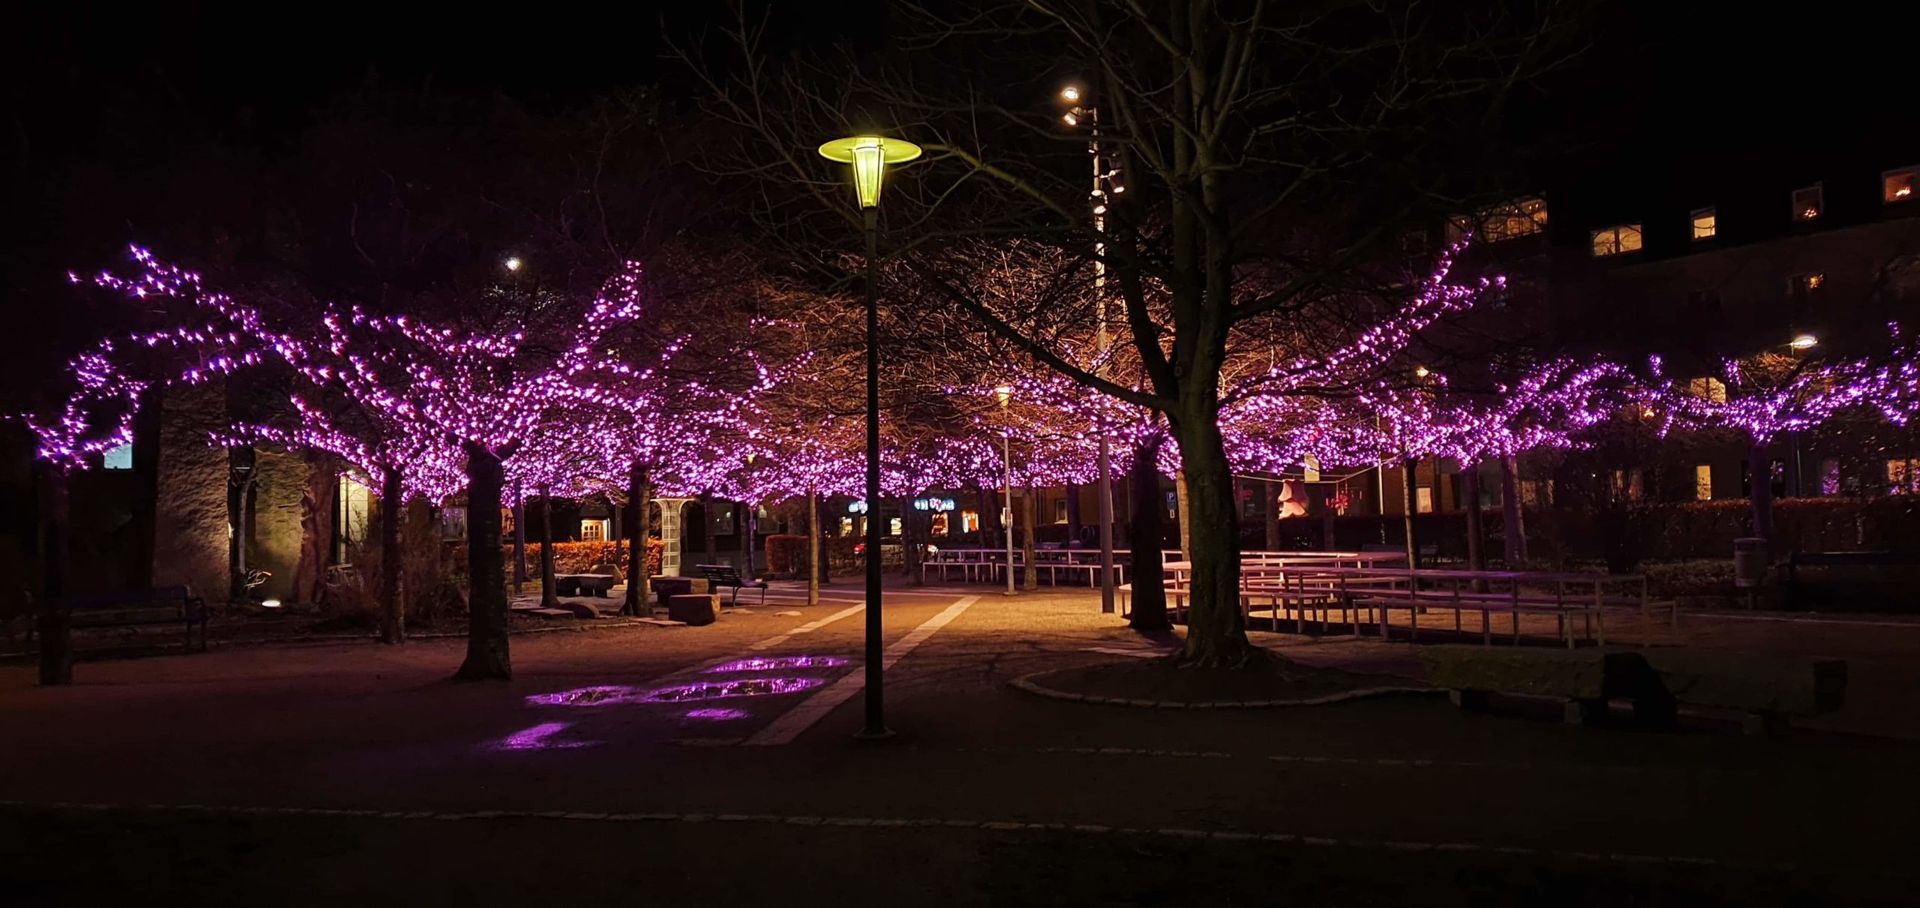 Dark night time, a bright streetlight and trees full of bright purple fairy lights